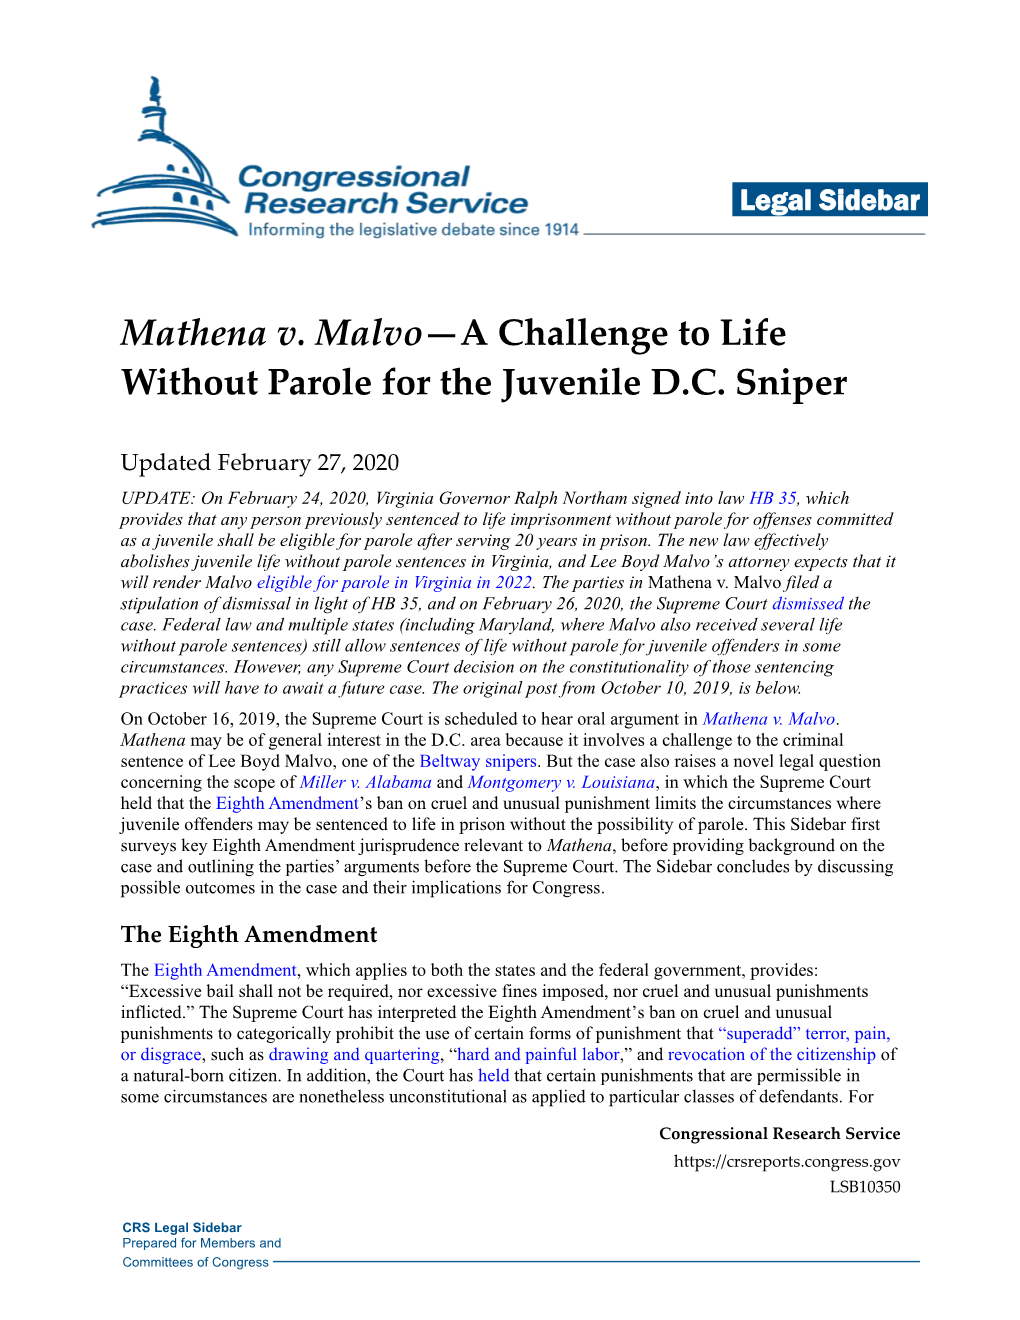 Mathena V. Malvo—A Challenge to Life Without Parole for the Juvenile D.C. Sniper